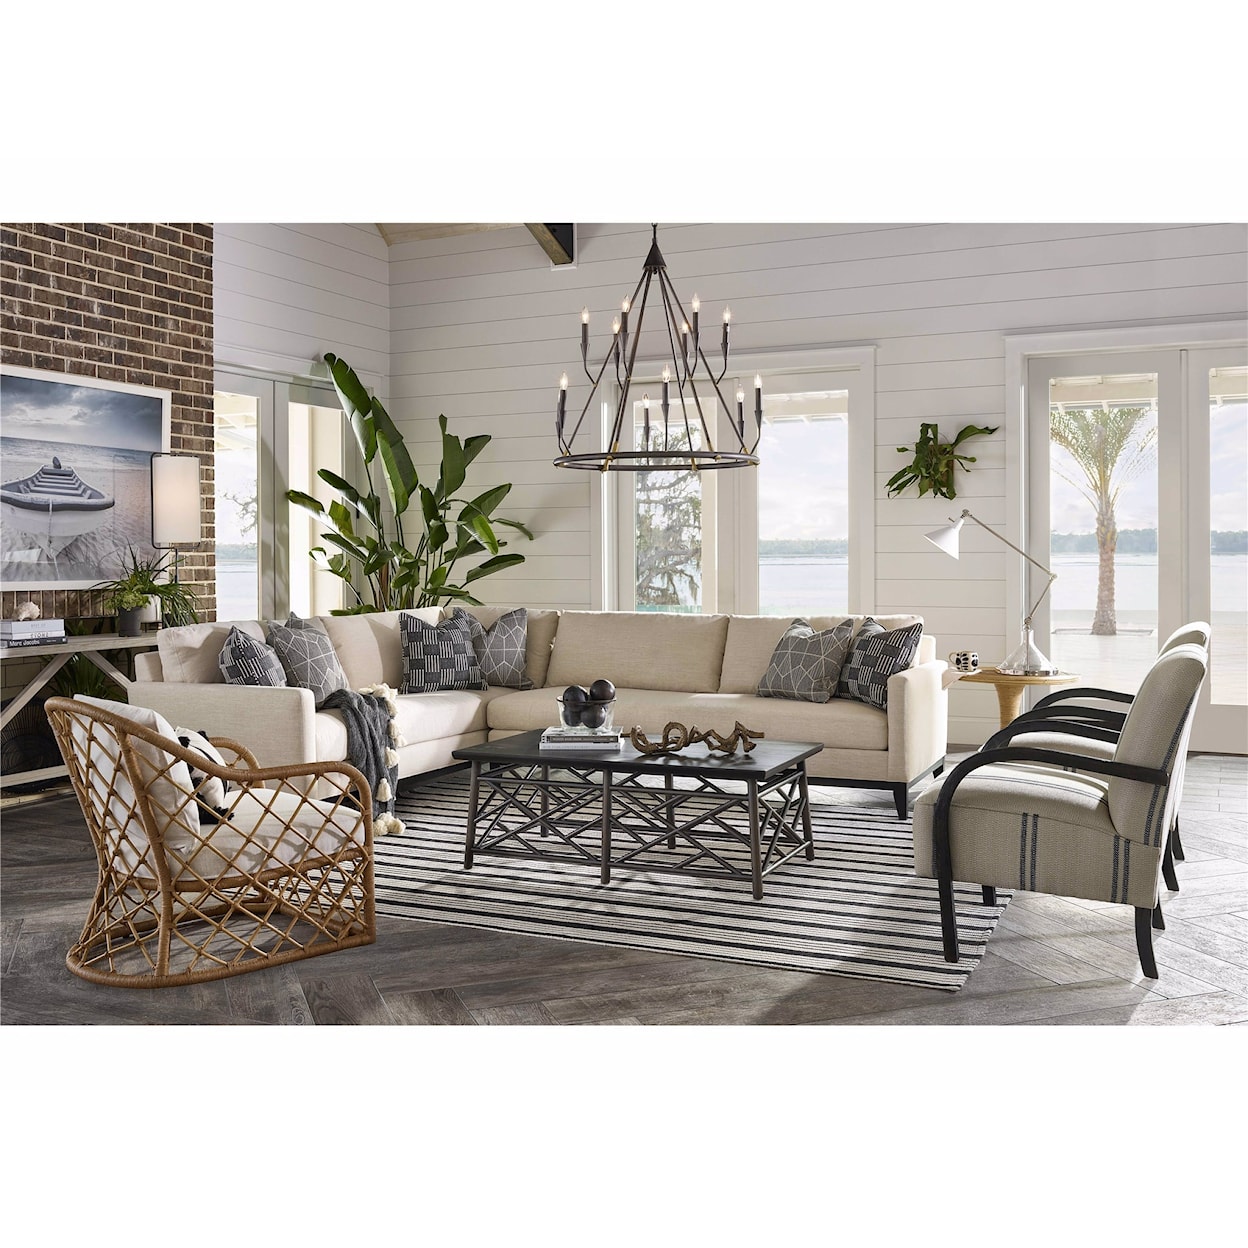 Universal Getaway Coastal Living Home Accent Chair